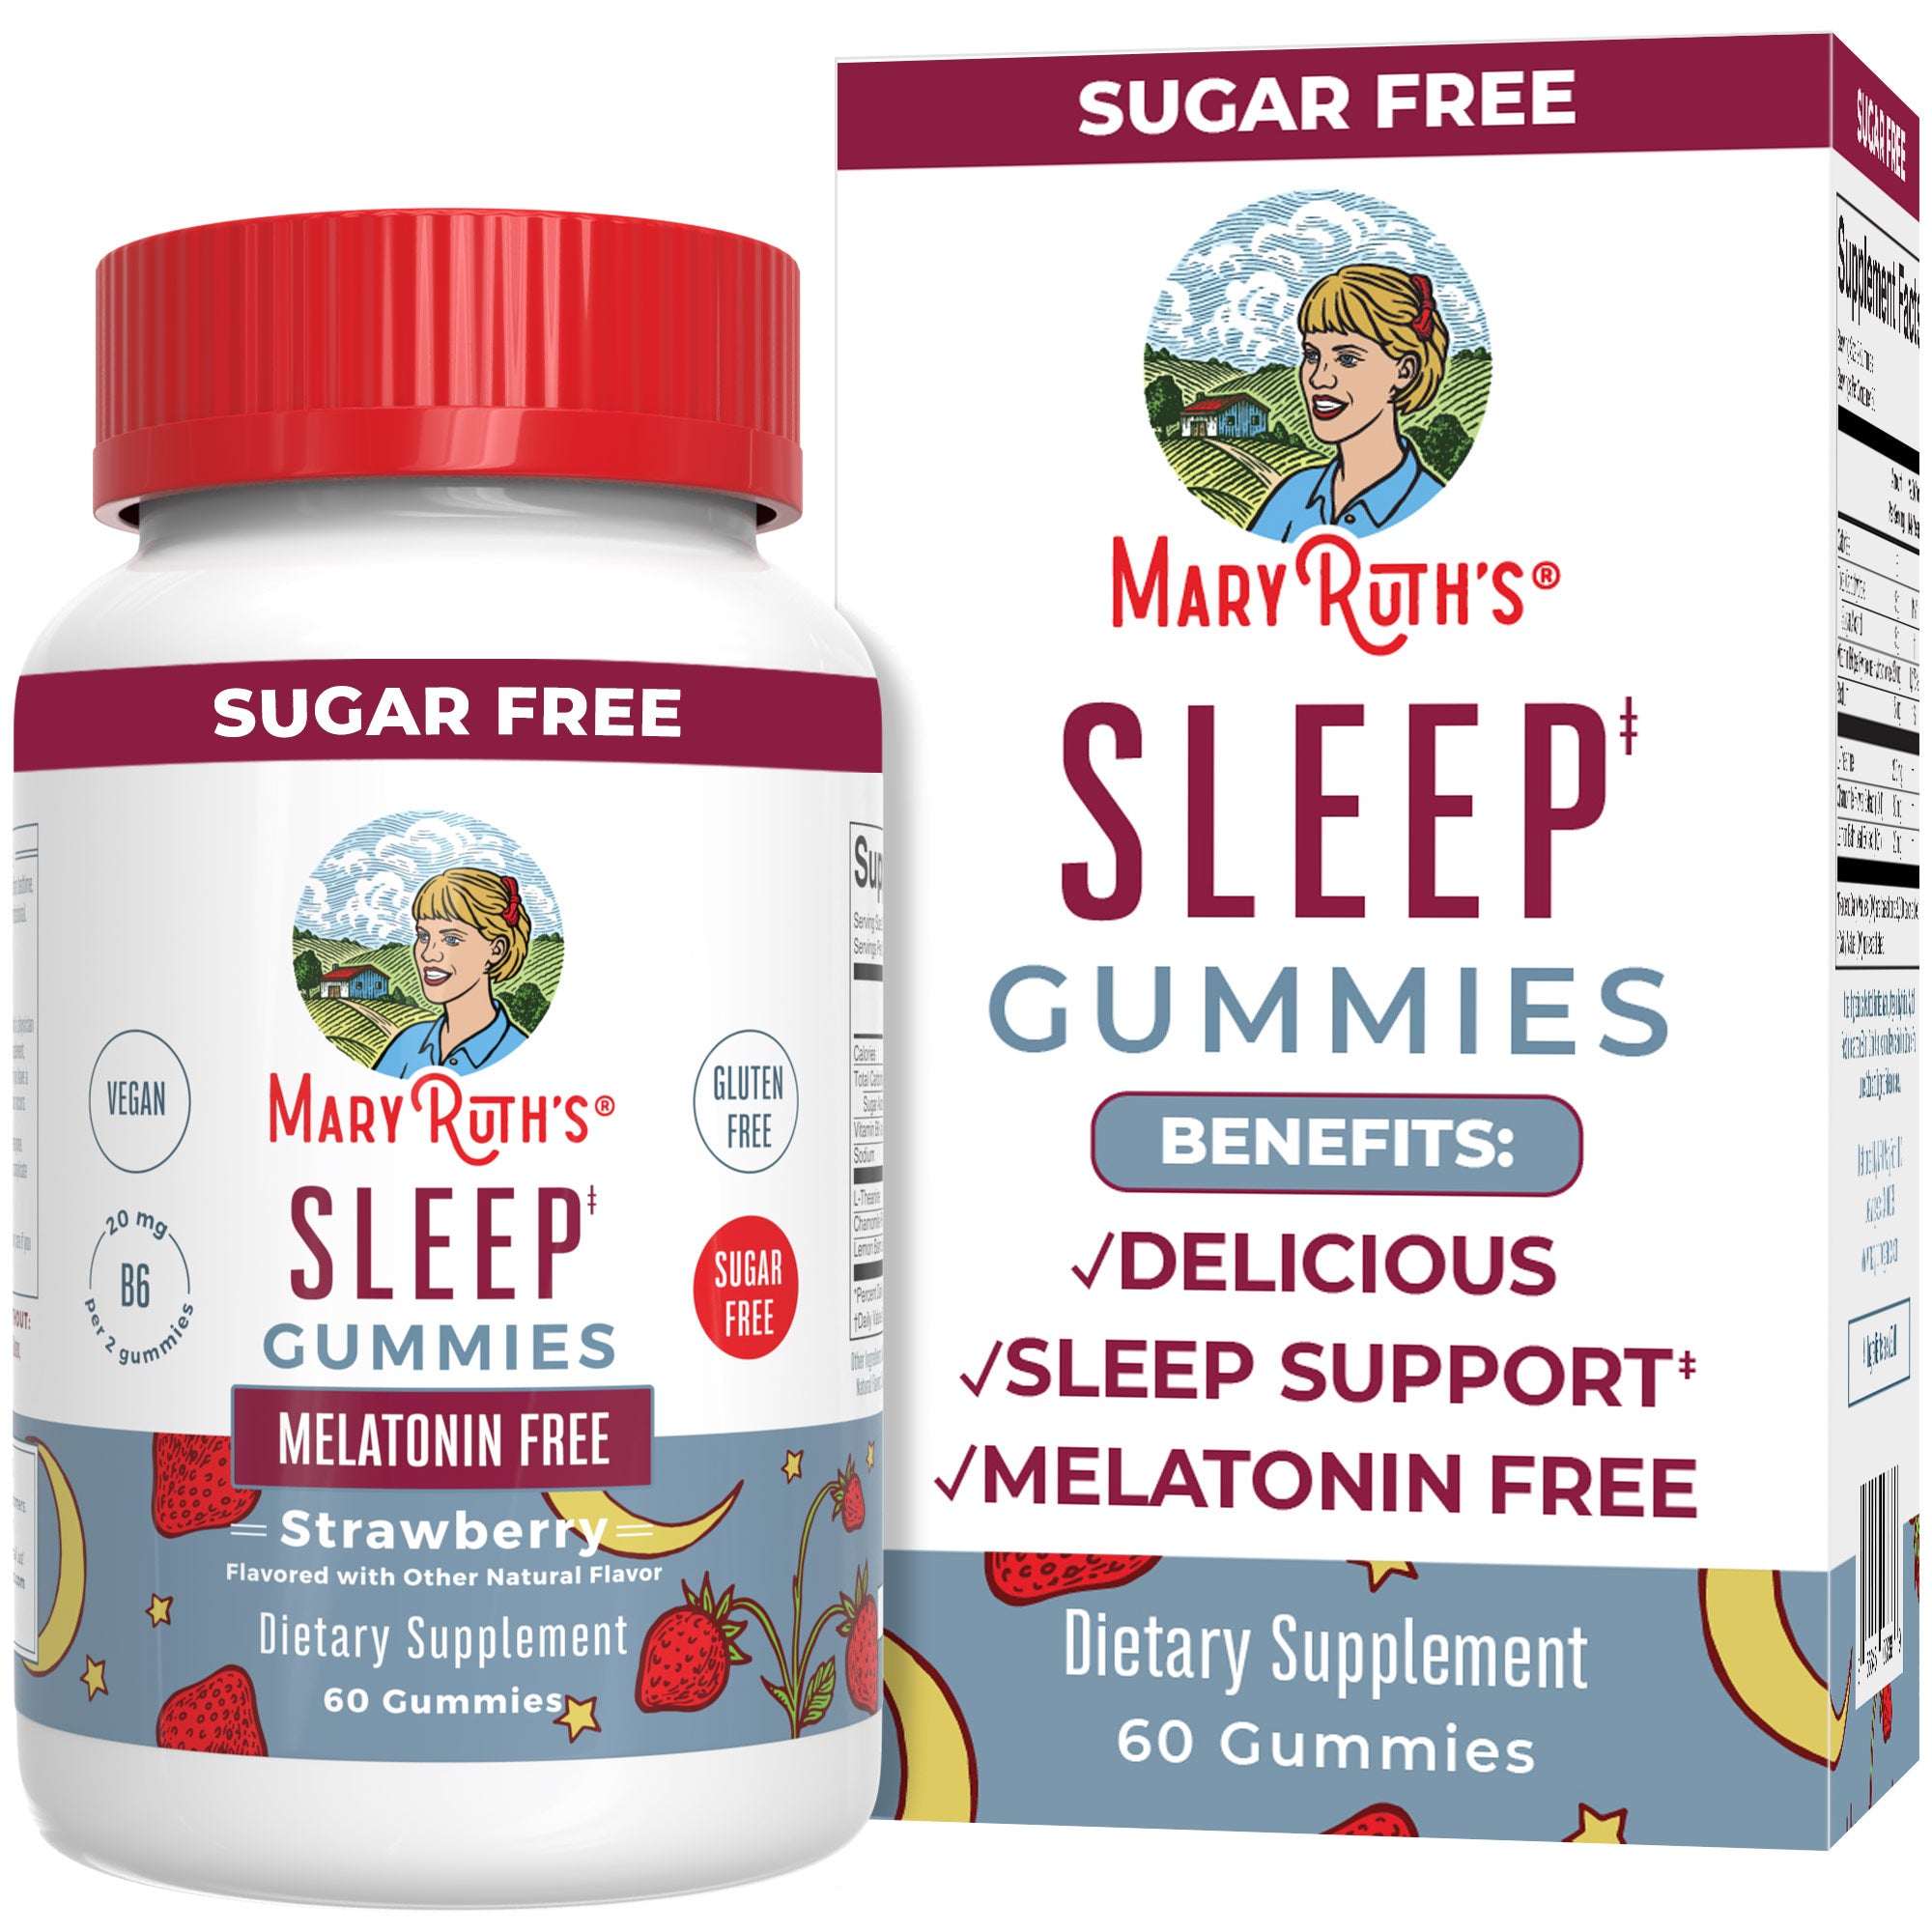 Melatonin Free Sleep Gummies